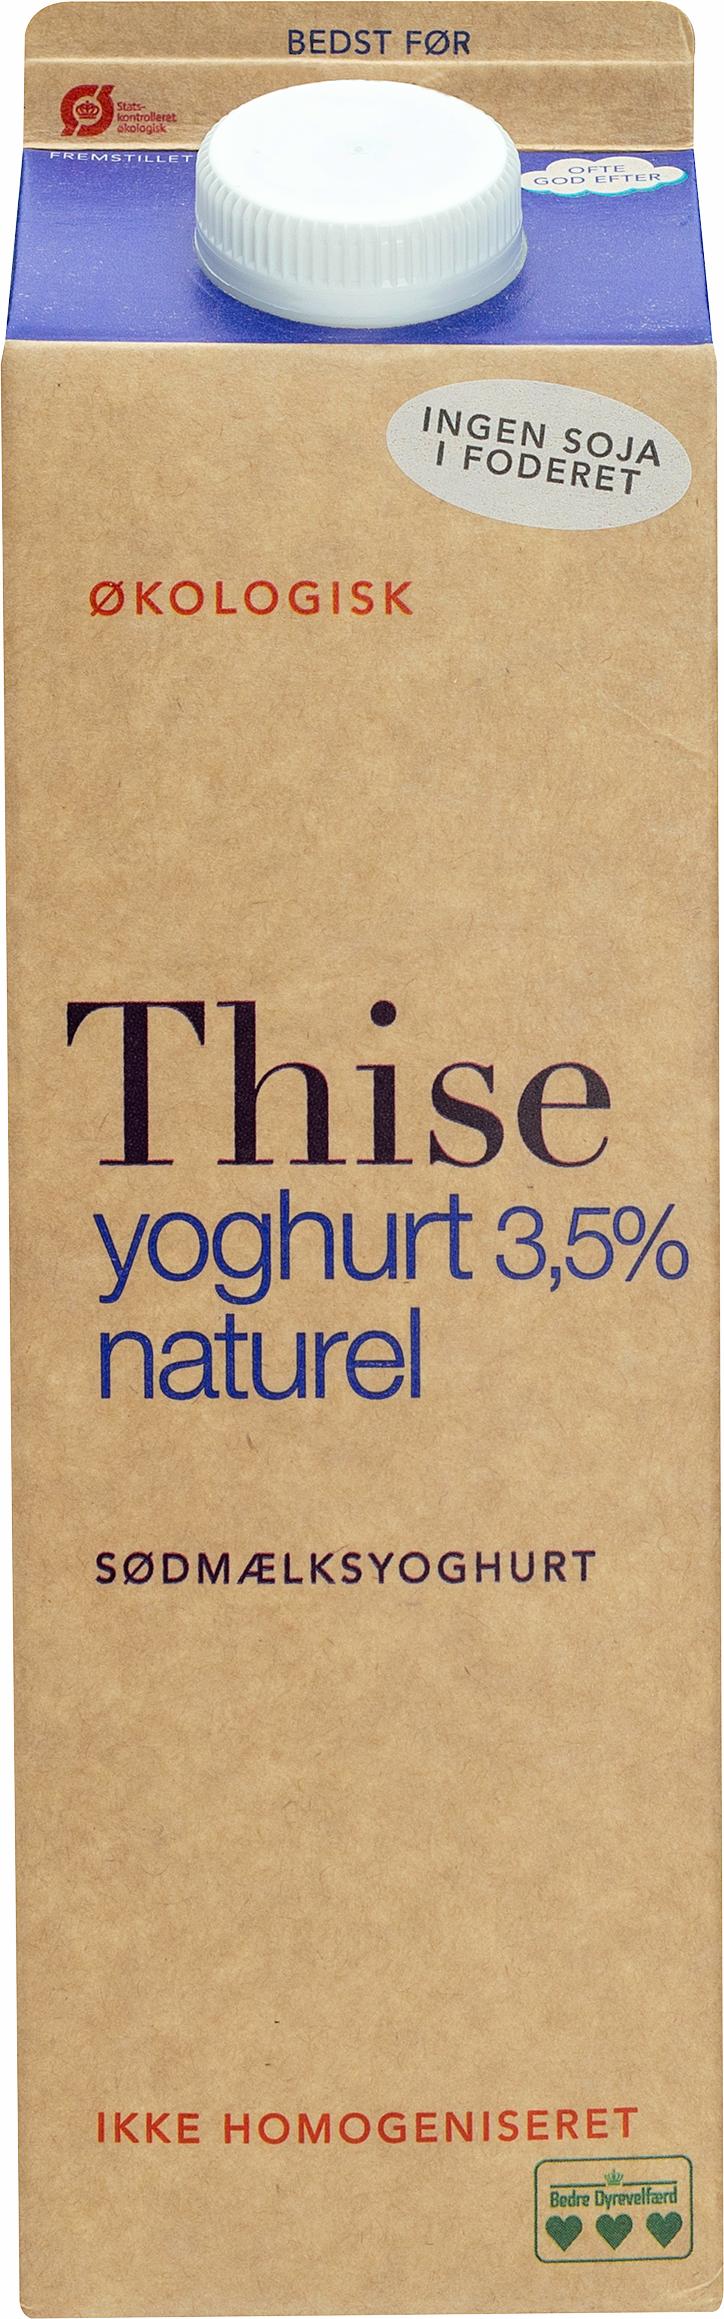 Thise Yoghurt Naturel 3,5% 1000g